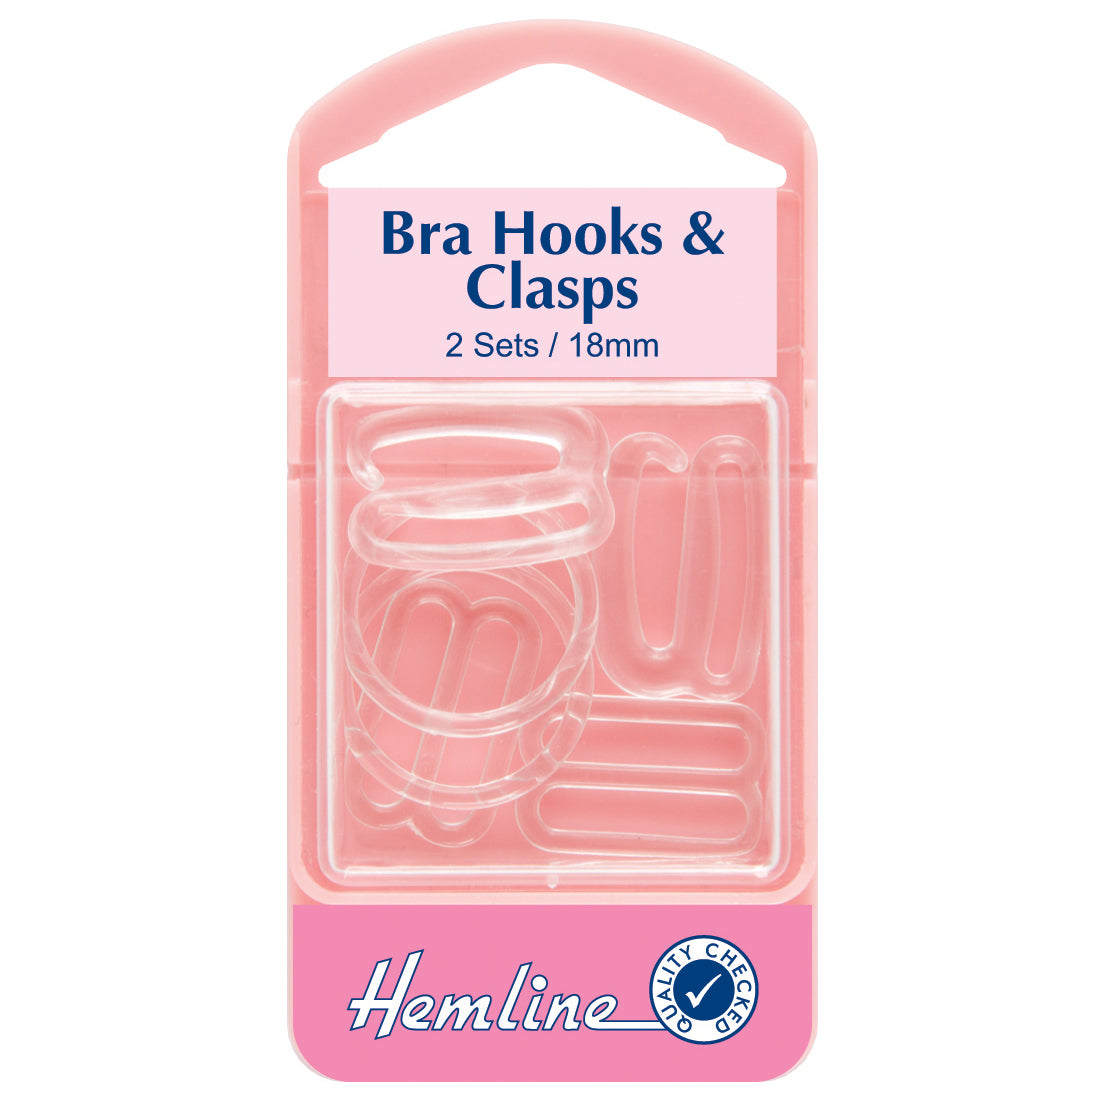 Hemline Bra Hooks and Clasps 18mm clear 2 sets